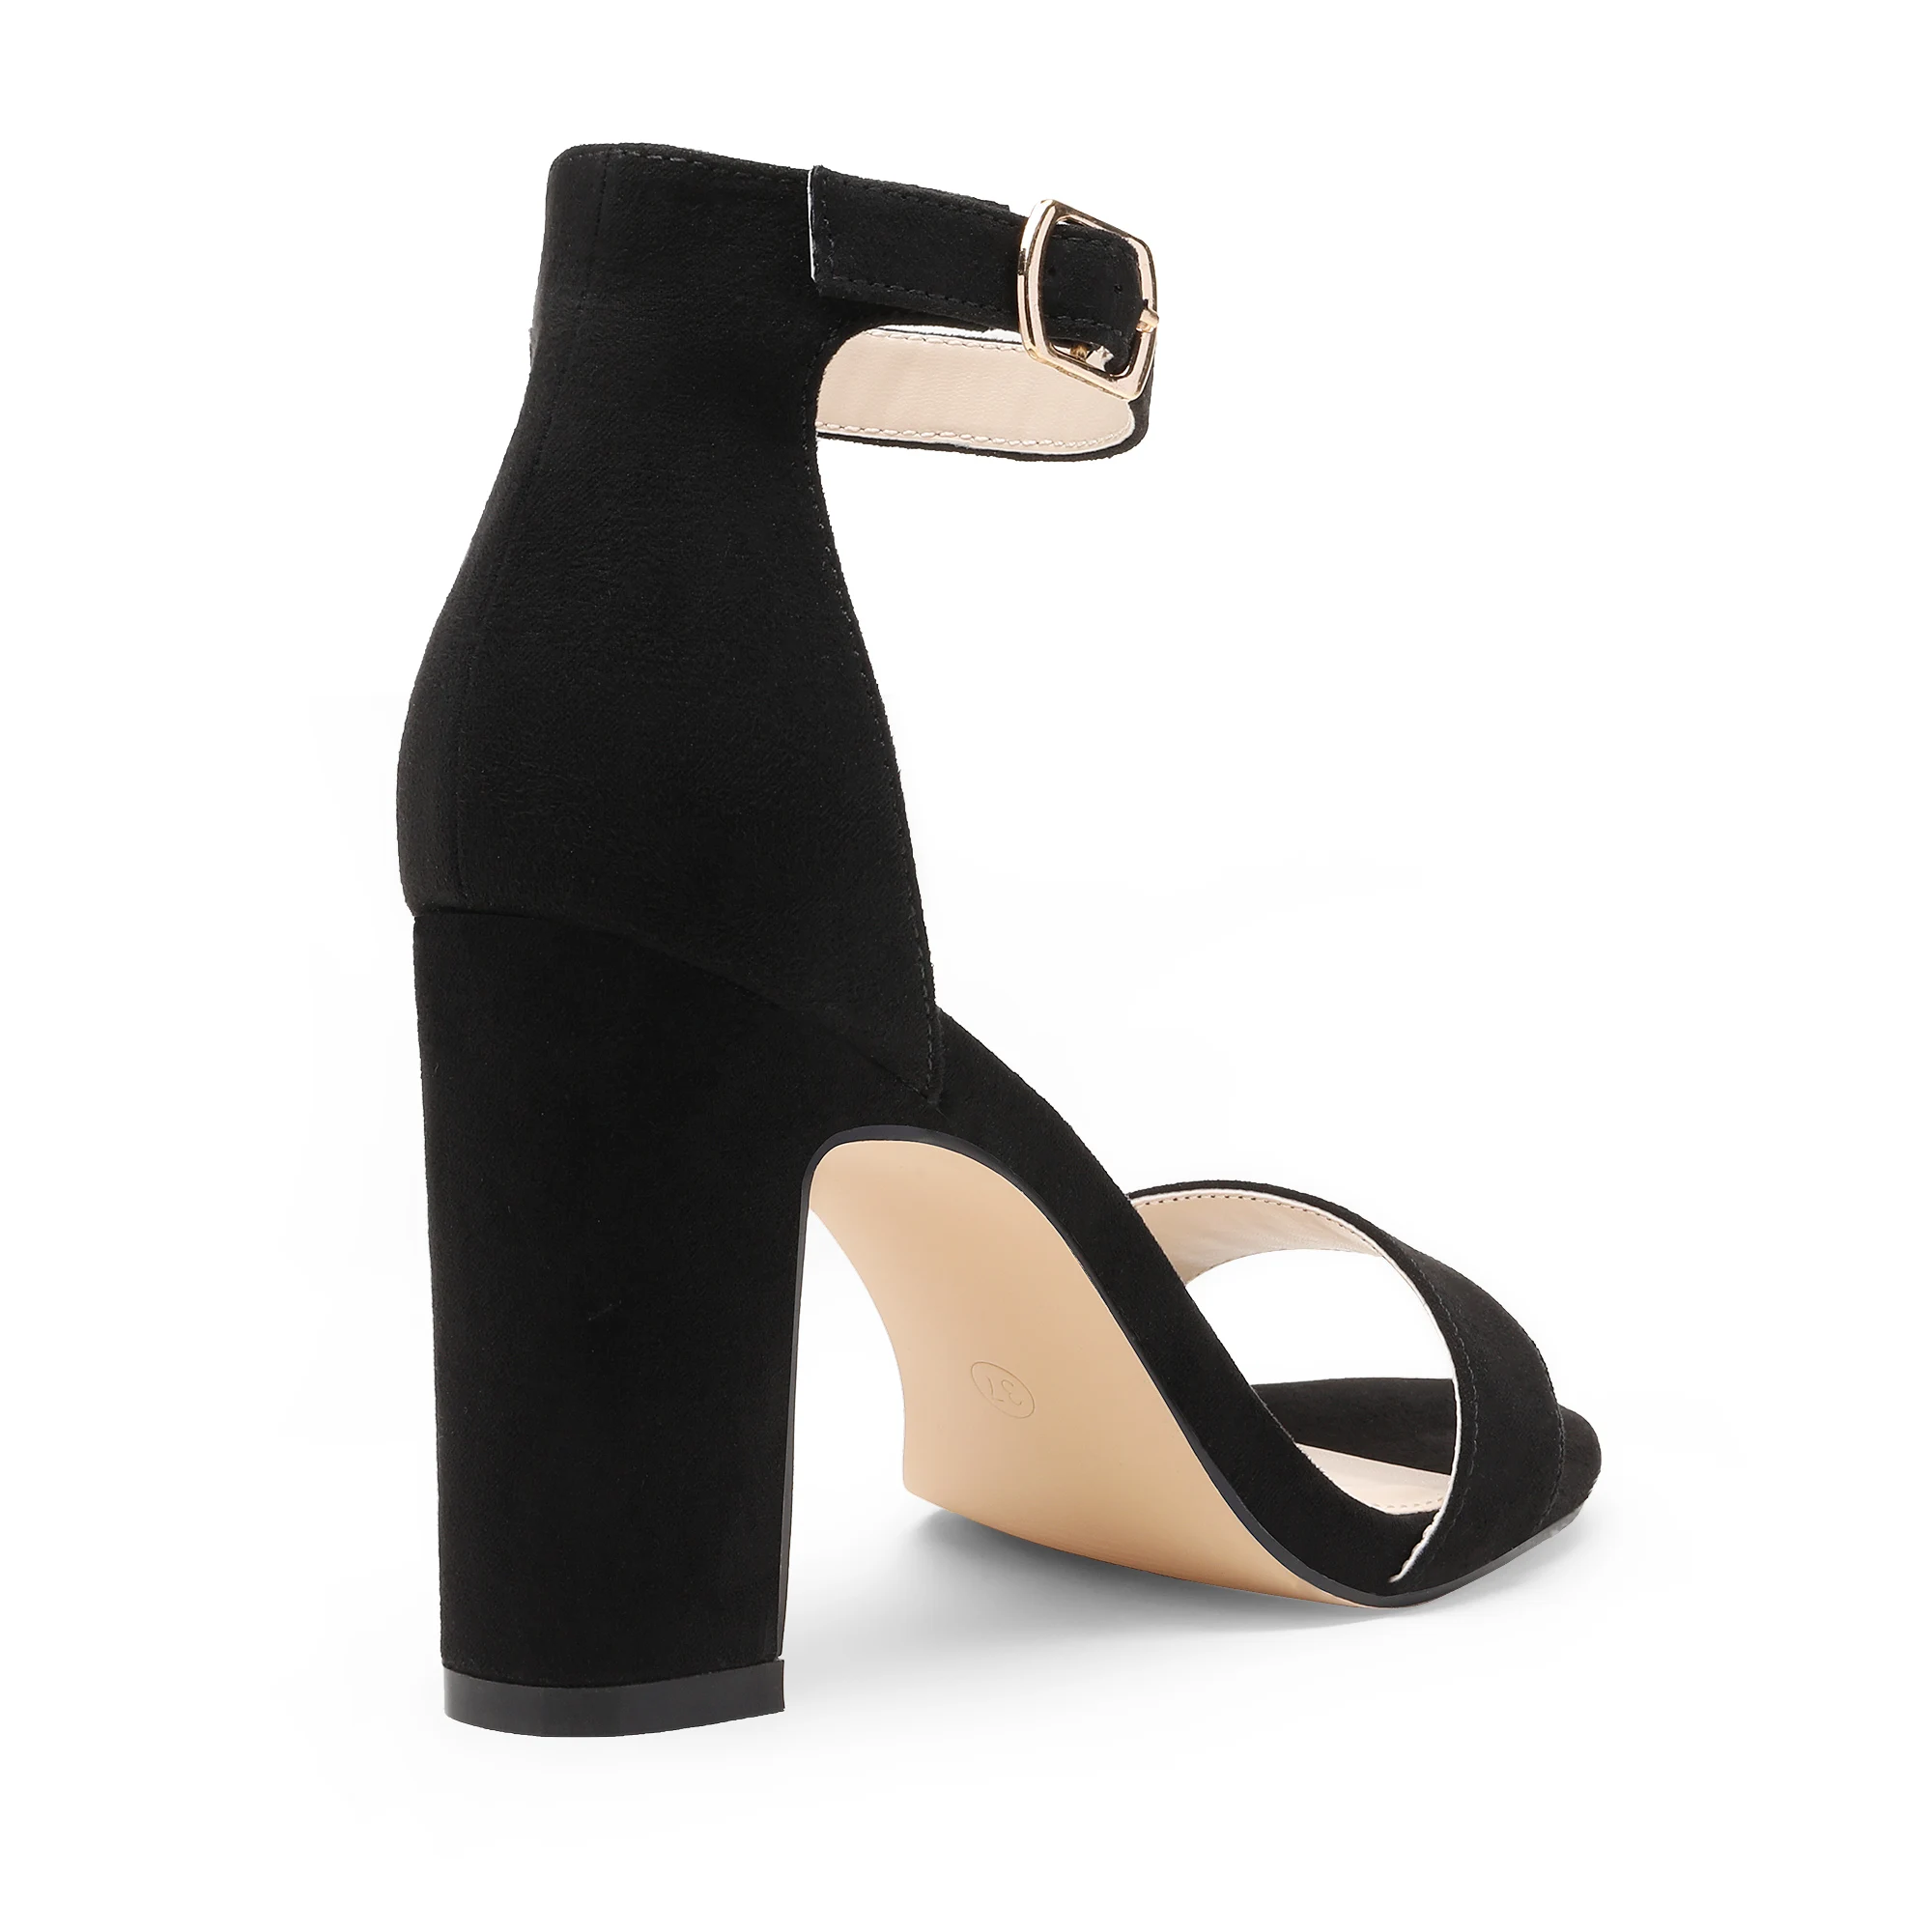 Buy Happy Women Block Heel Sandal Ankle Adjustbale Party-Wear Casual Office  Sandal Pink-36 at Amazon.in